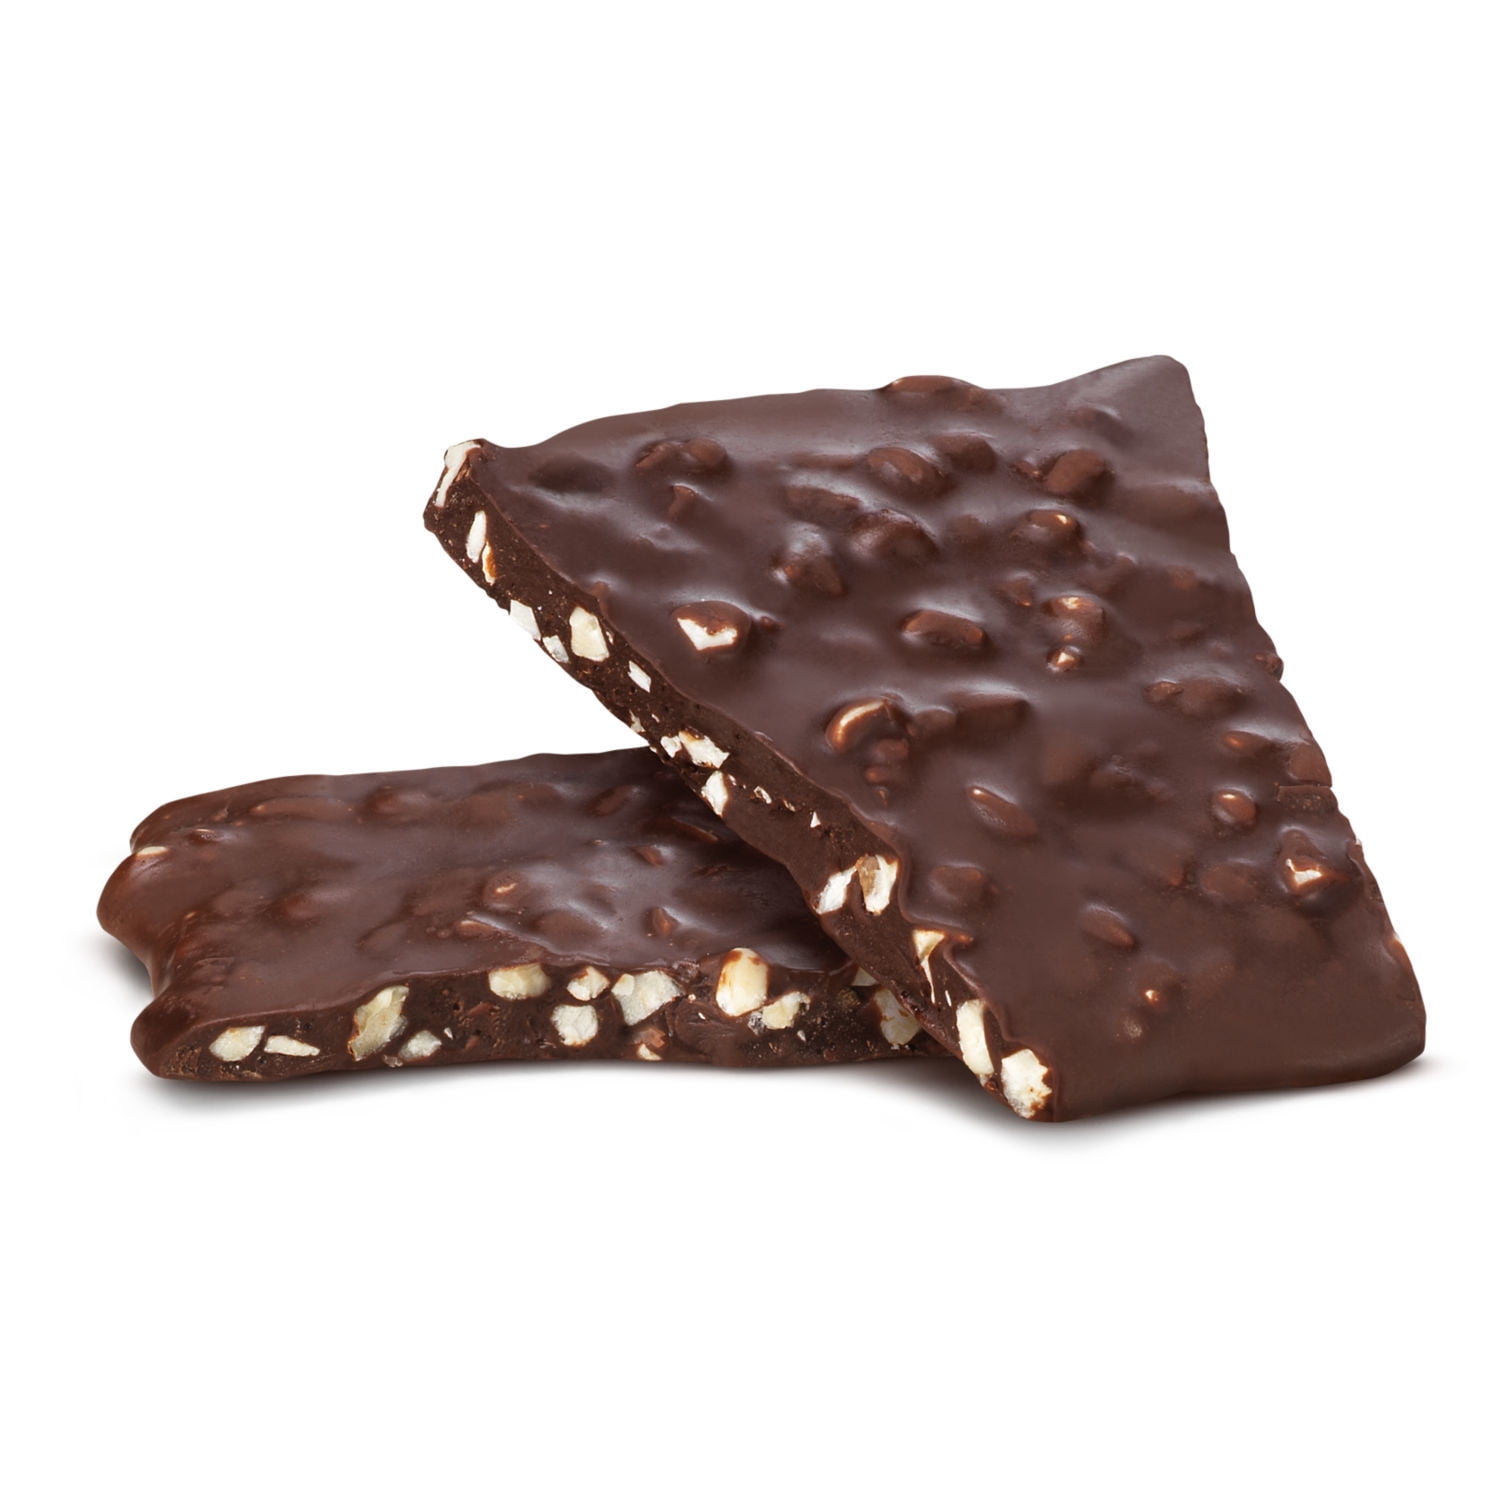 Barkthins Dark Chocolate Snack Variety Pack (Almond Sea Salt, Pretzel Sea Salt, Coconut Almond), 4.7-oz. Bags, 3 Count